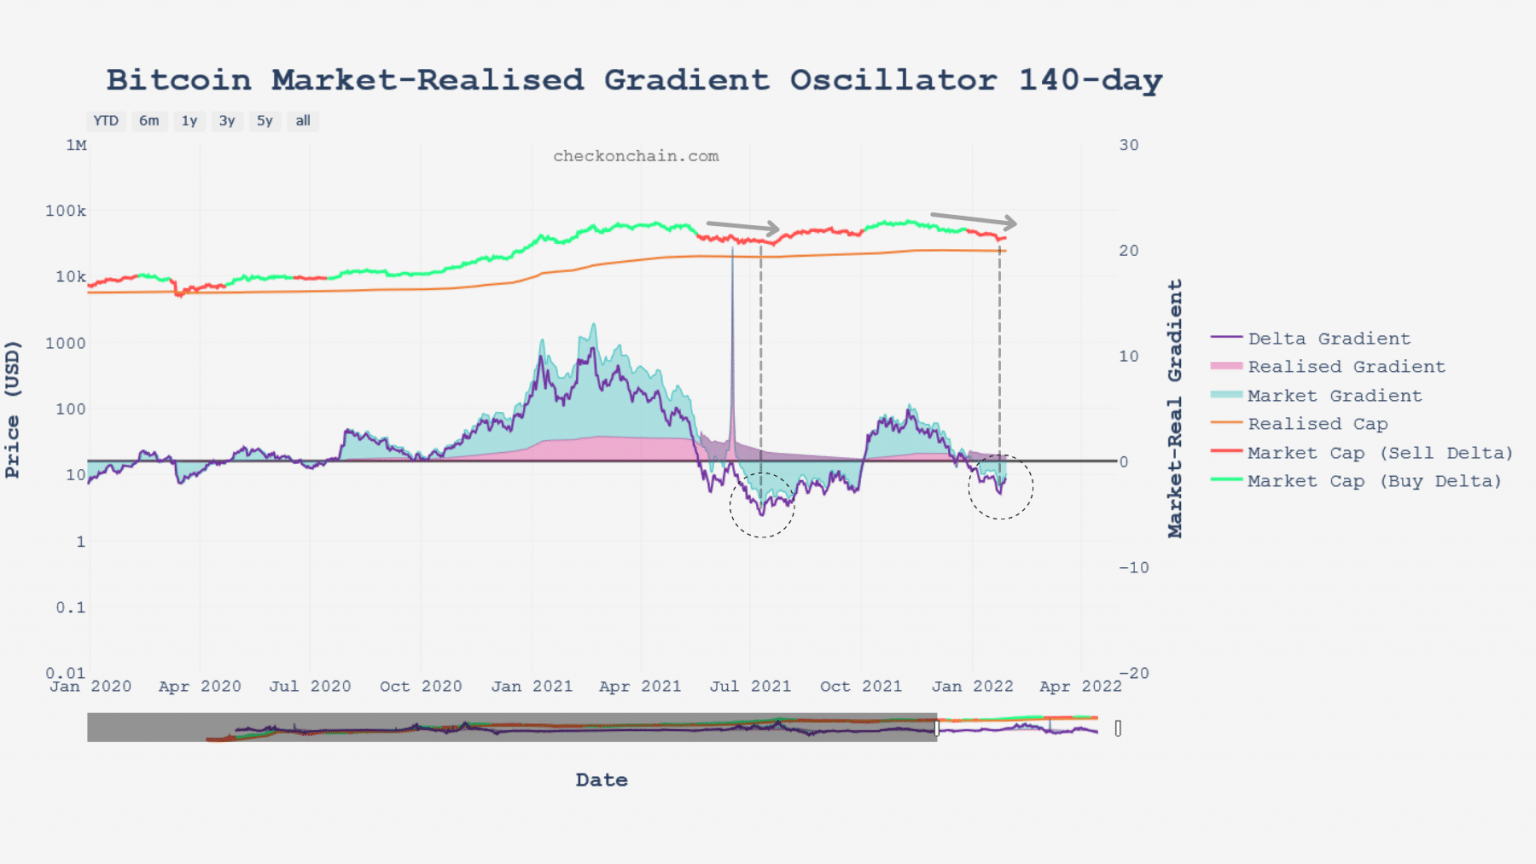 MRG-140 chart van bitcoin